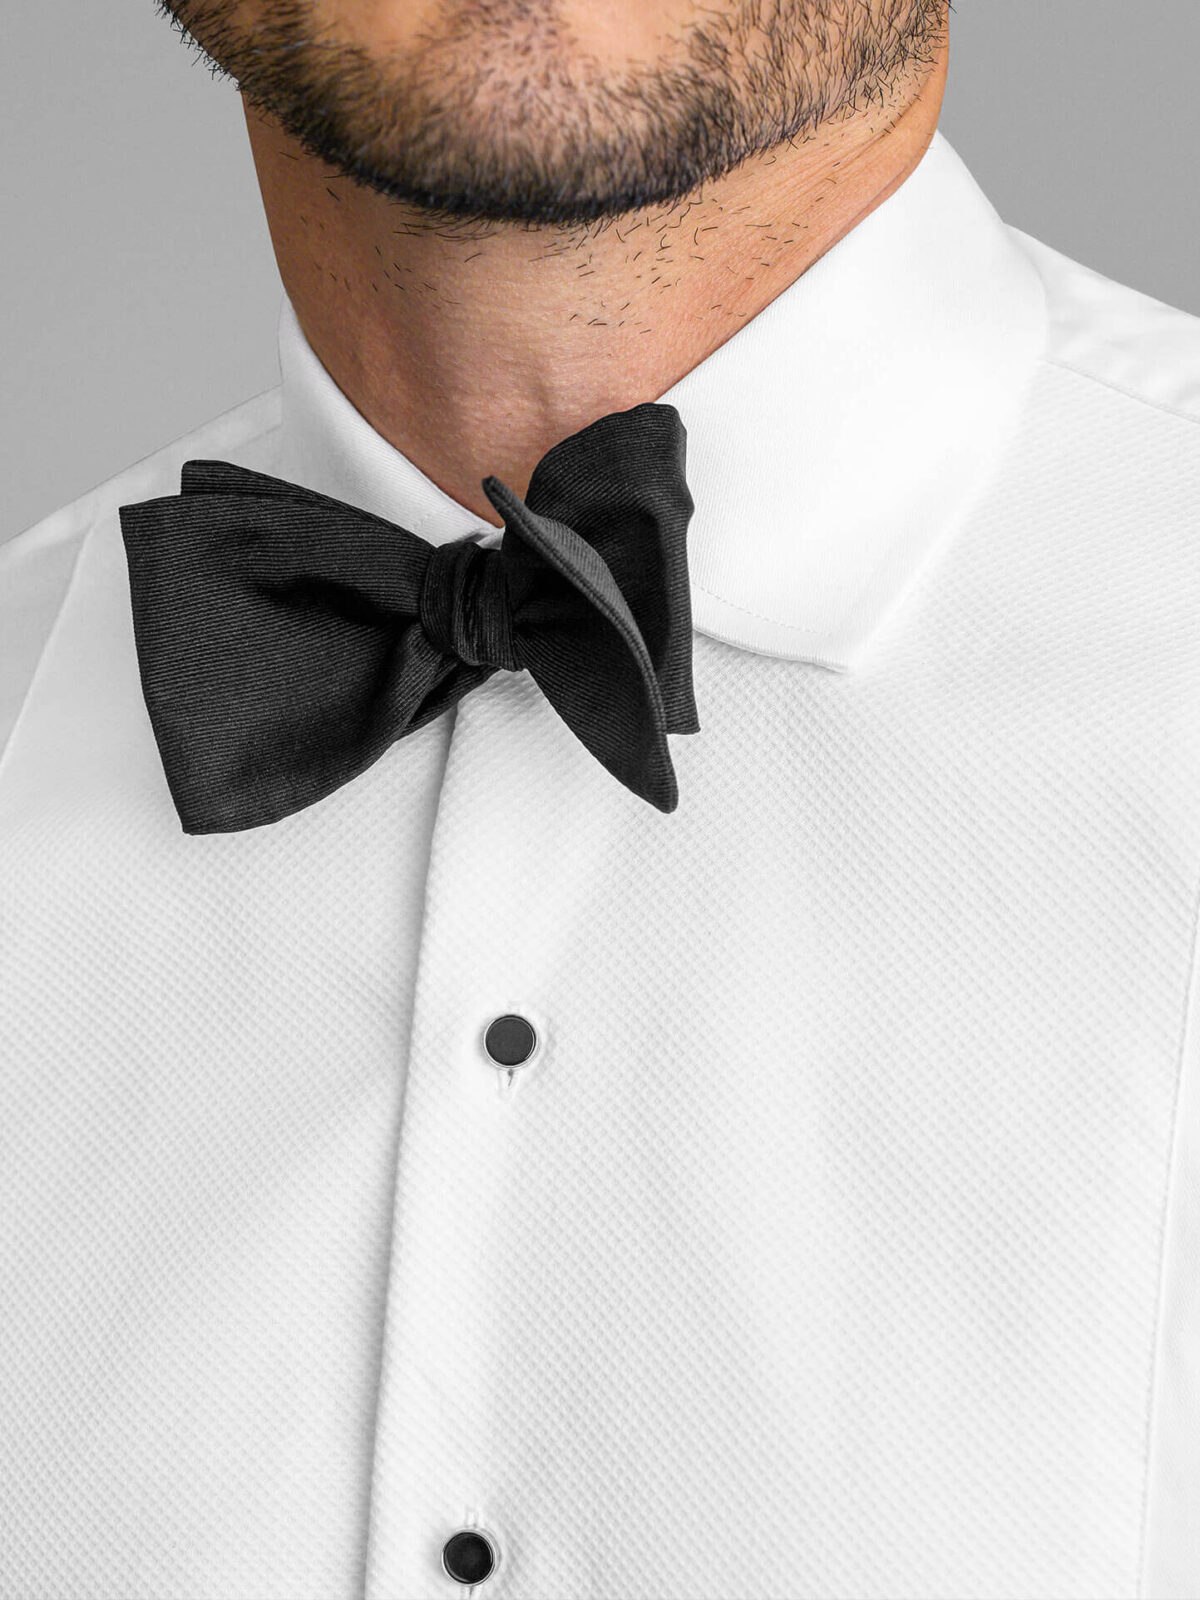 Black Grosgrain Bow Tie by Proper Cloth